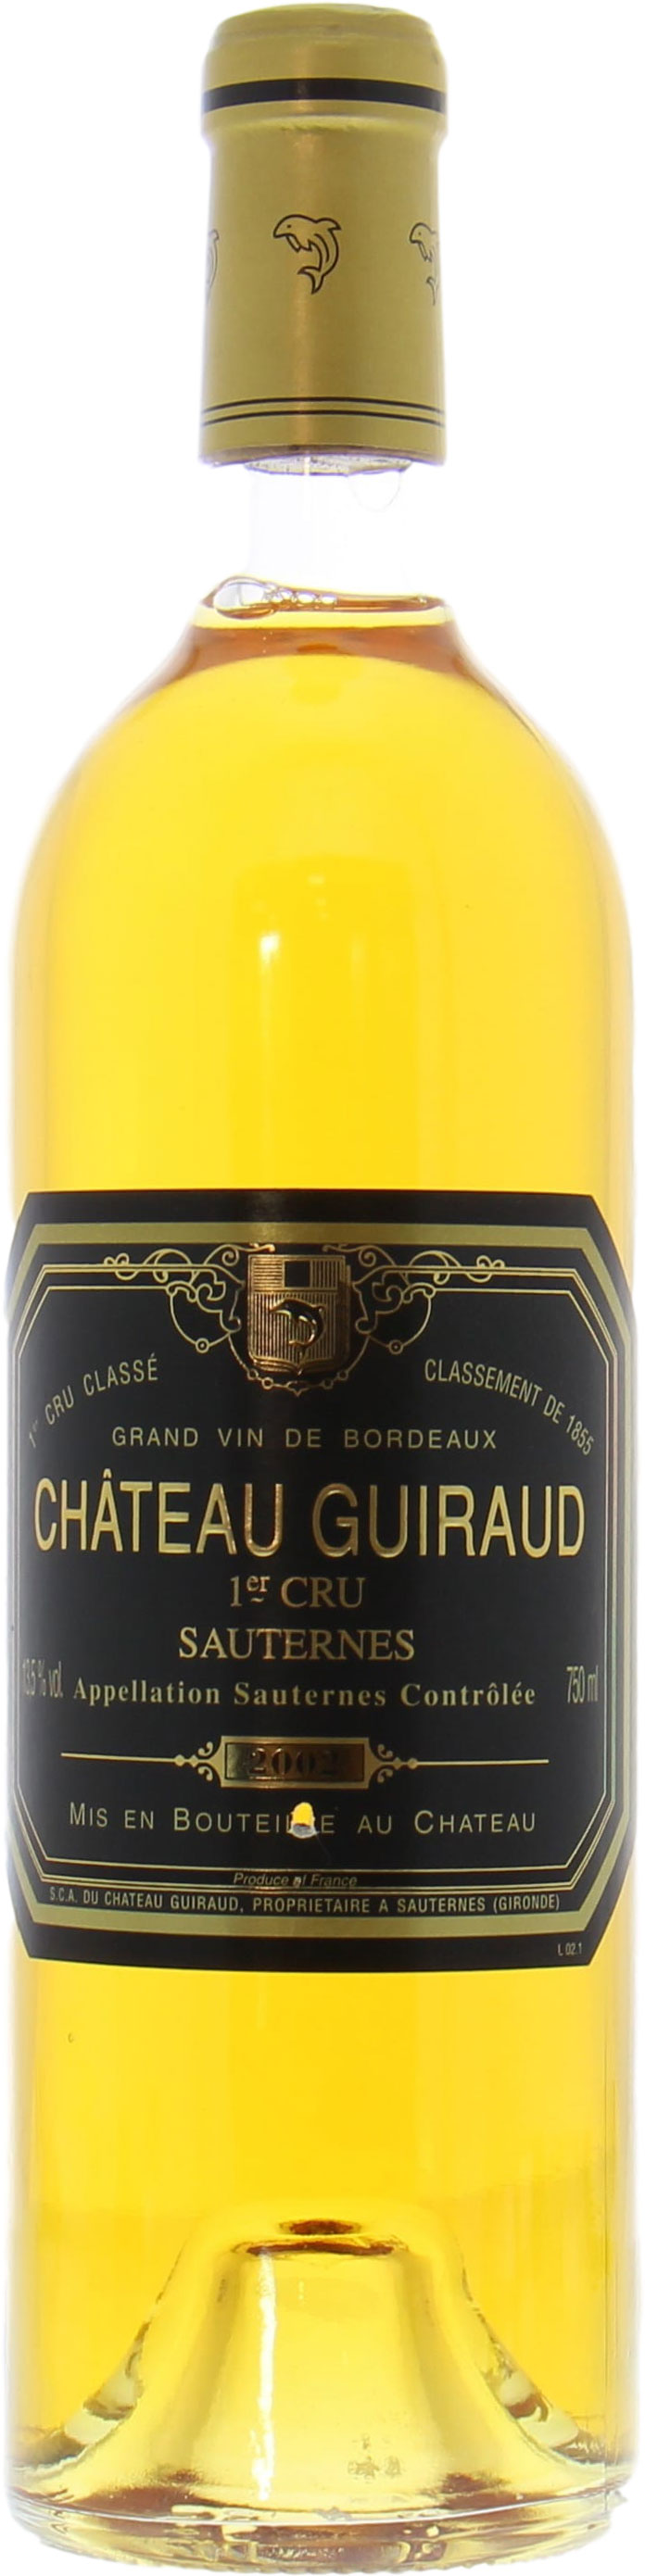 Chateau Guiraud - Chateau Guiraud 2002 Perfect